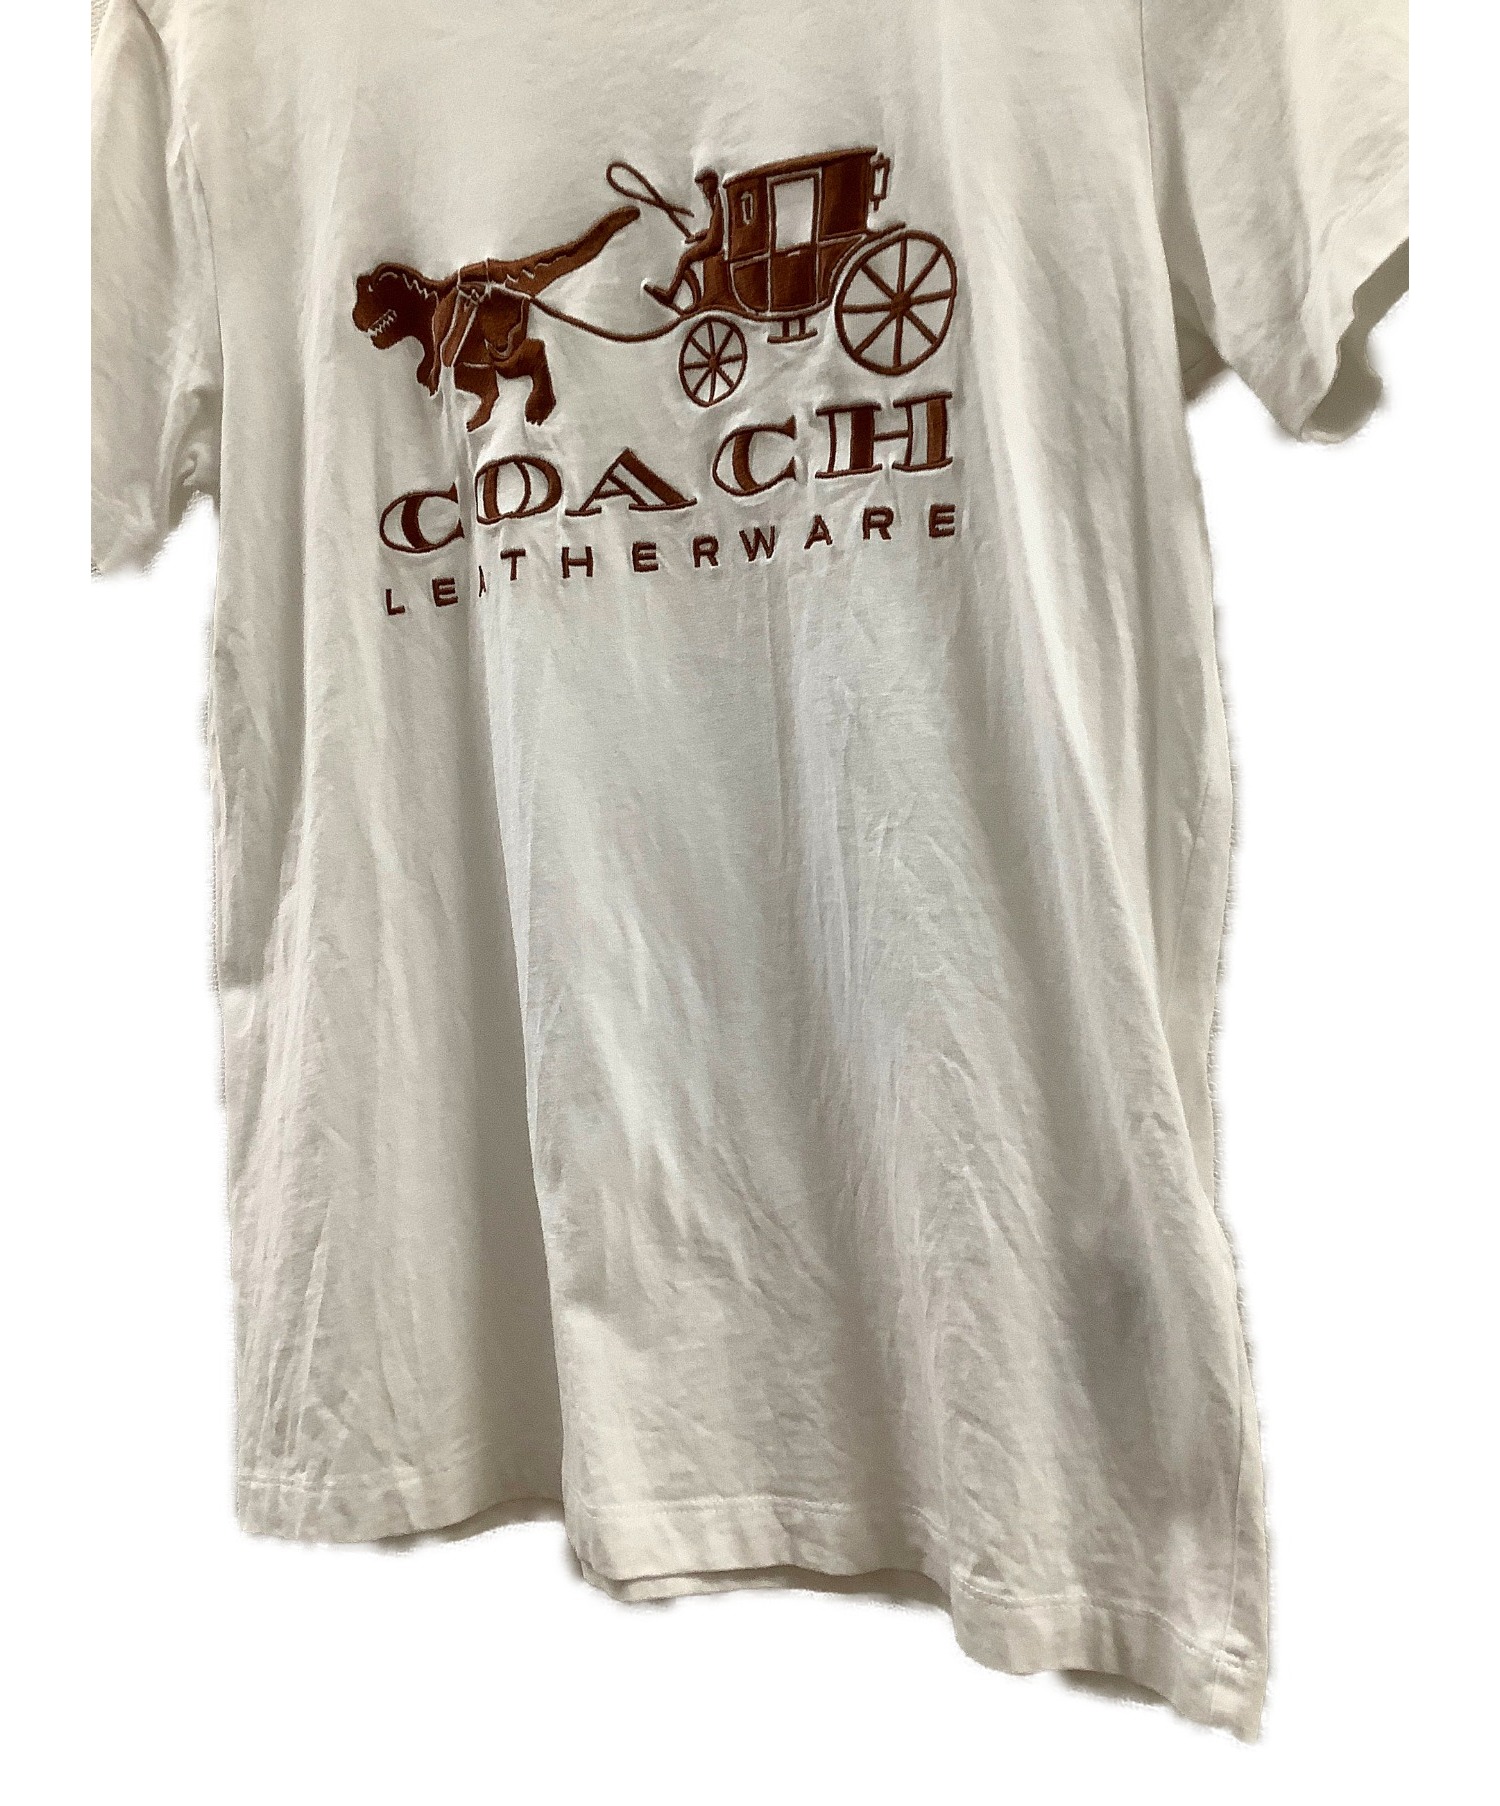 COACH (コーチ) レキシーアンドキャリッジTシャツ ホワイト サイズ:XS 夏物